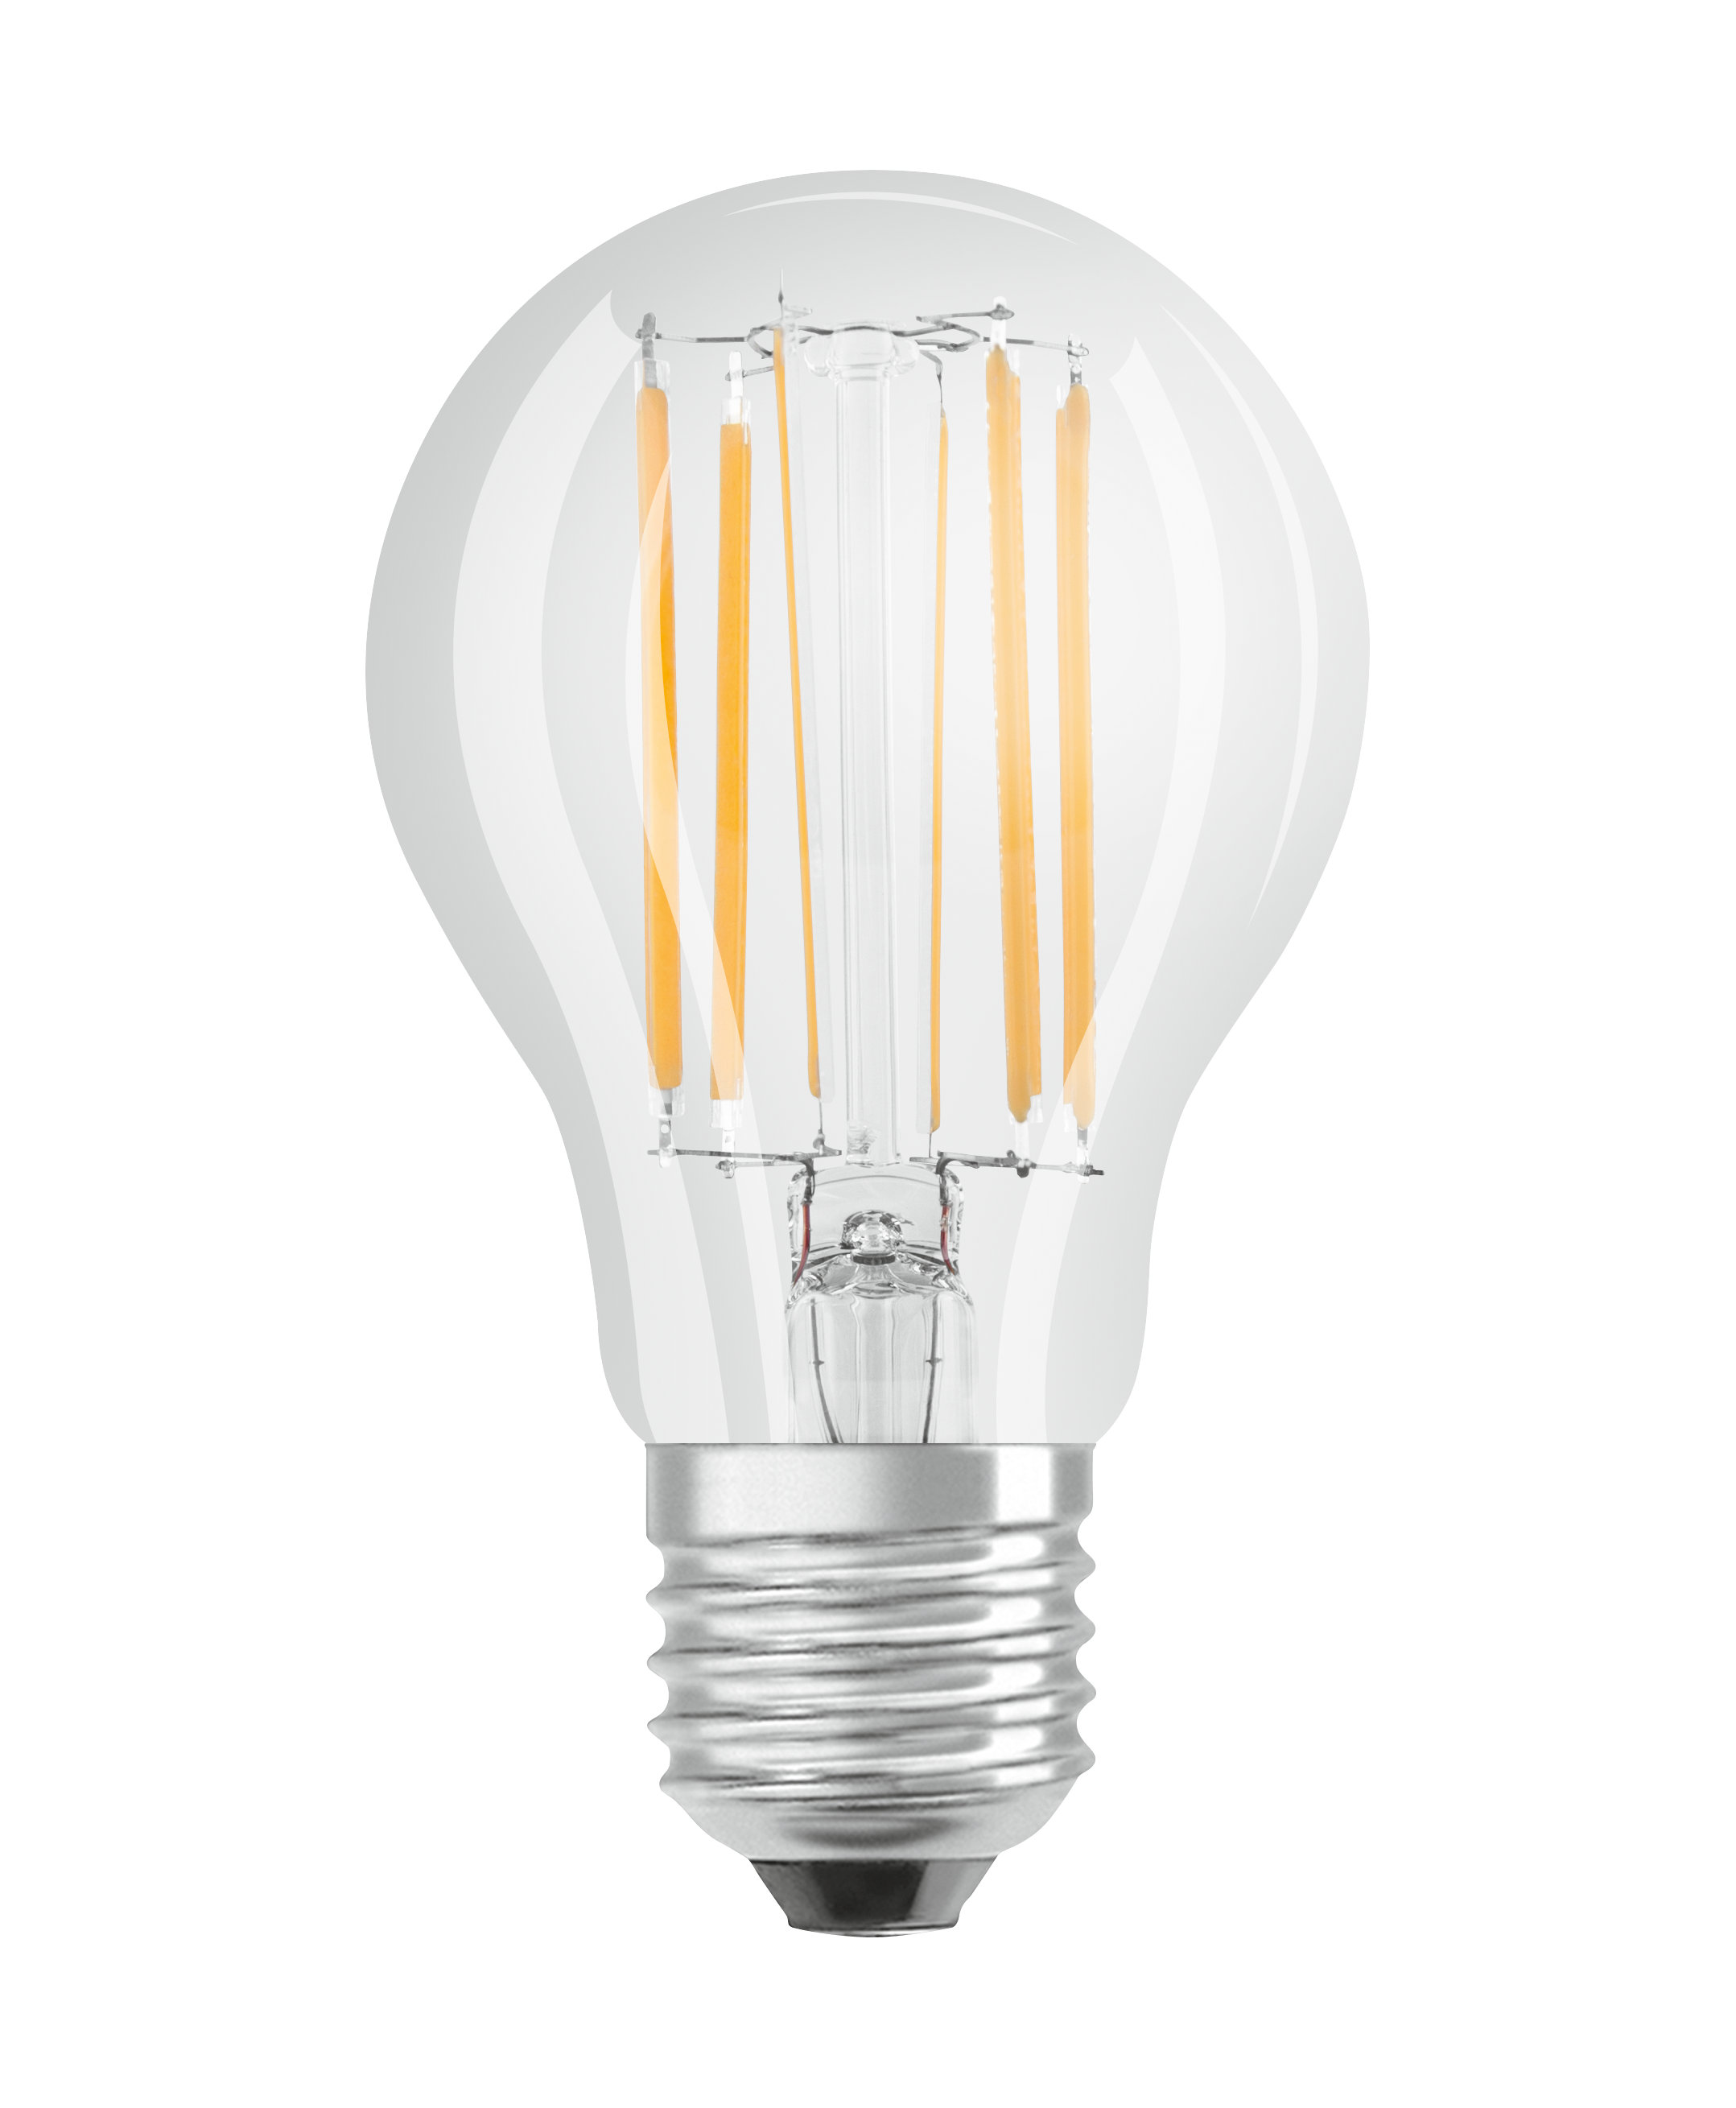 CLASSIC Warmweiß 1055 Lumen A LED Retrofit Lampe LED OSRAM 